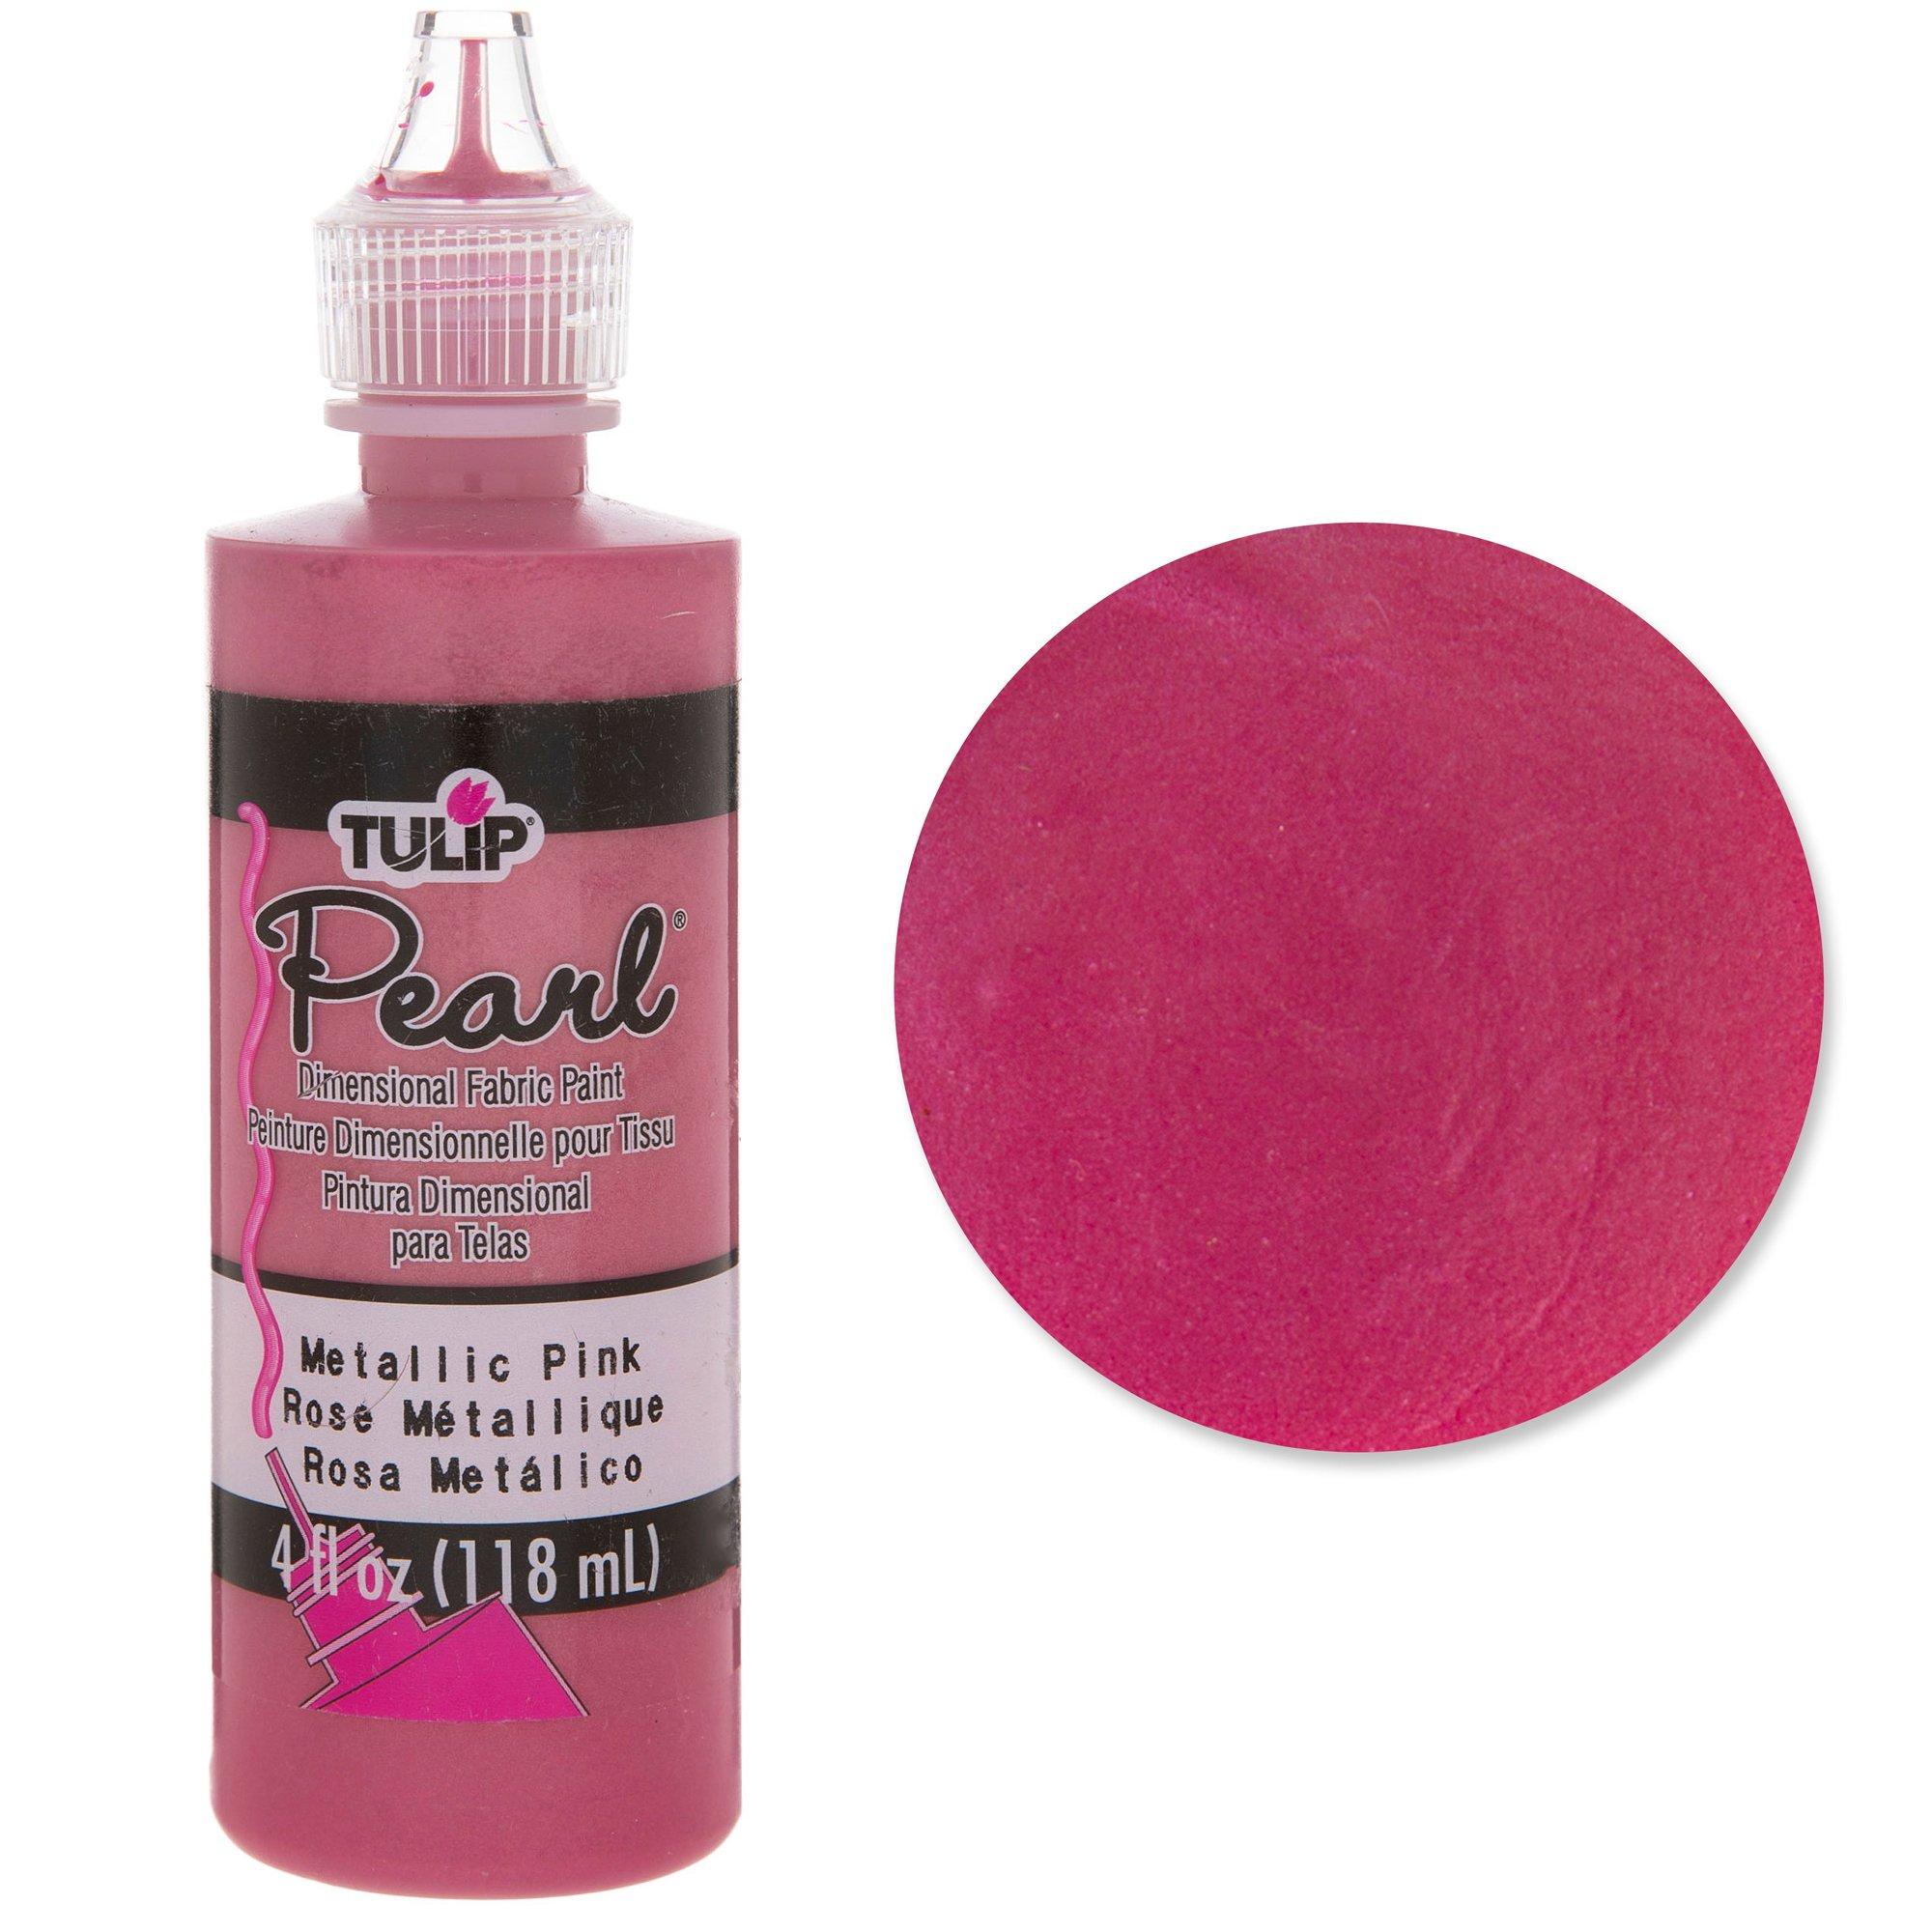 Tulip Dimensional Fabric Paint 26527 Dfpt 4oz Pearl Metallic Pink, MetallicPink, 4 fl oz